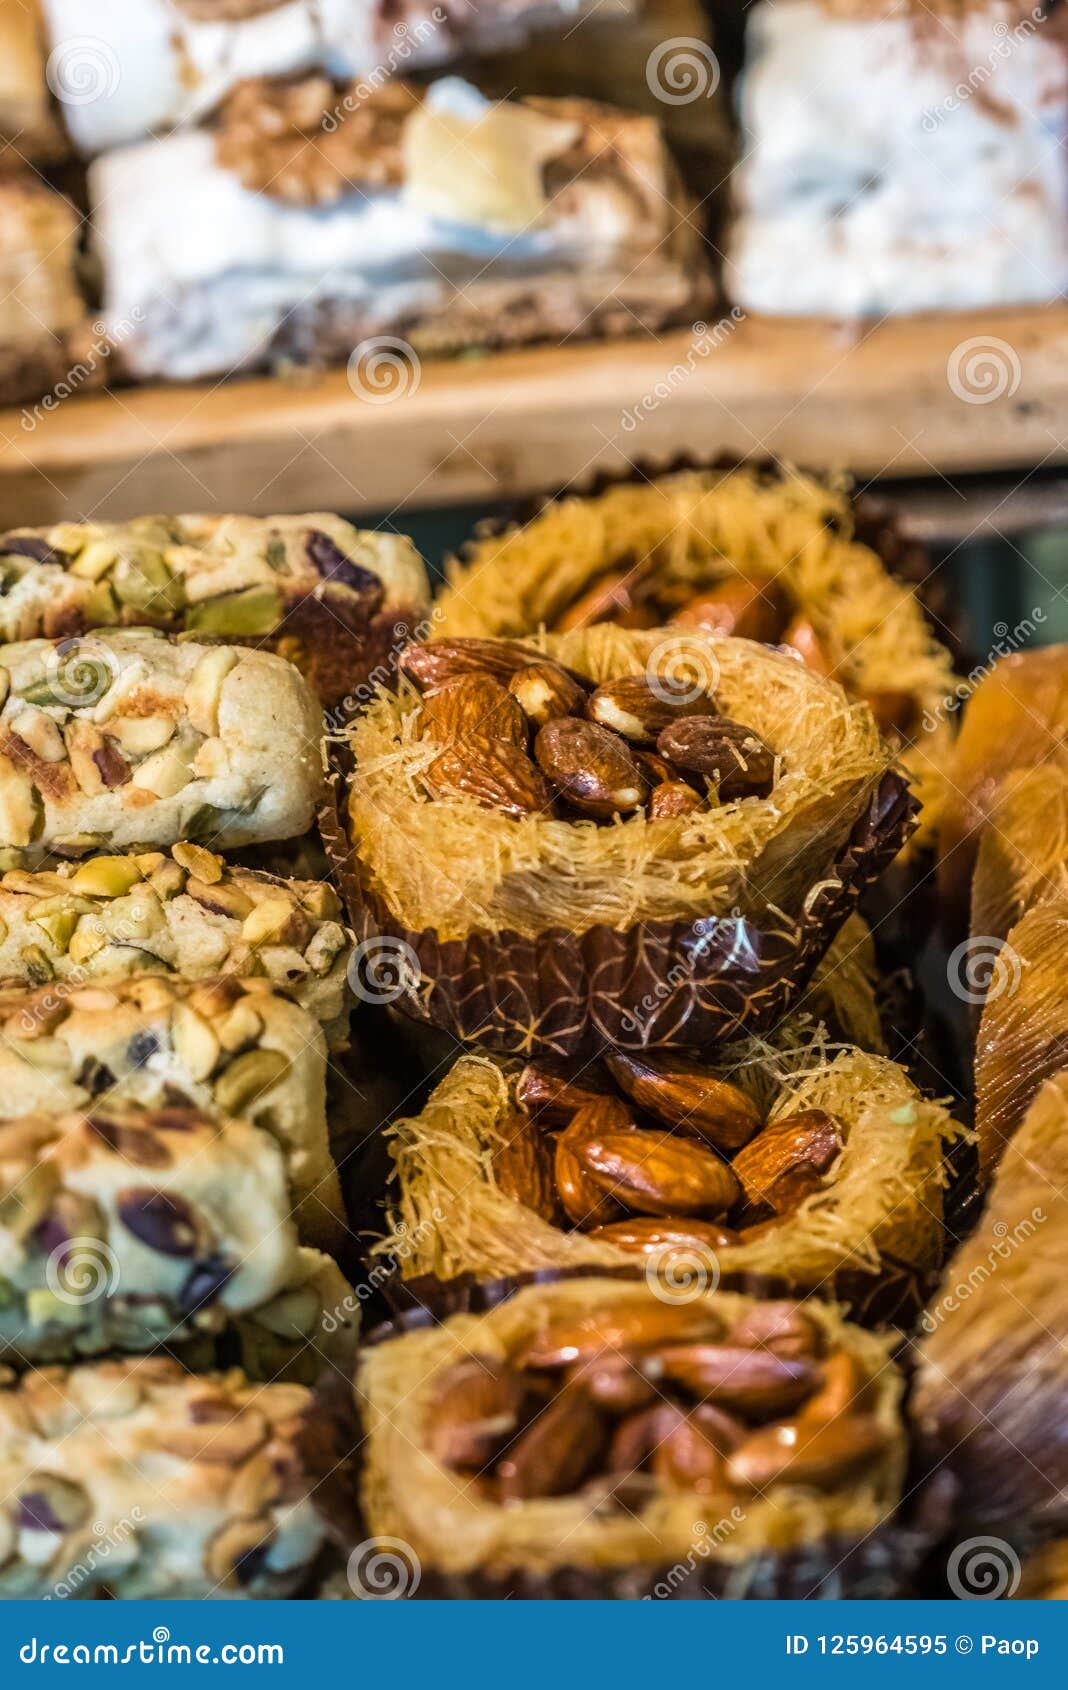 Almond and Pistachio Baklava Snack Stock Image - Image of arab, birds ...